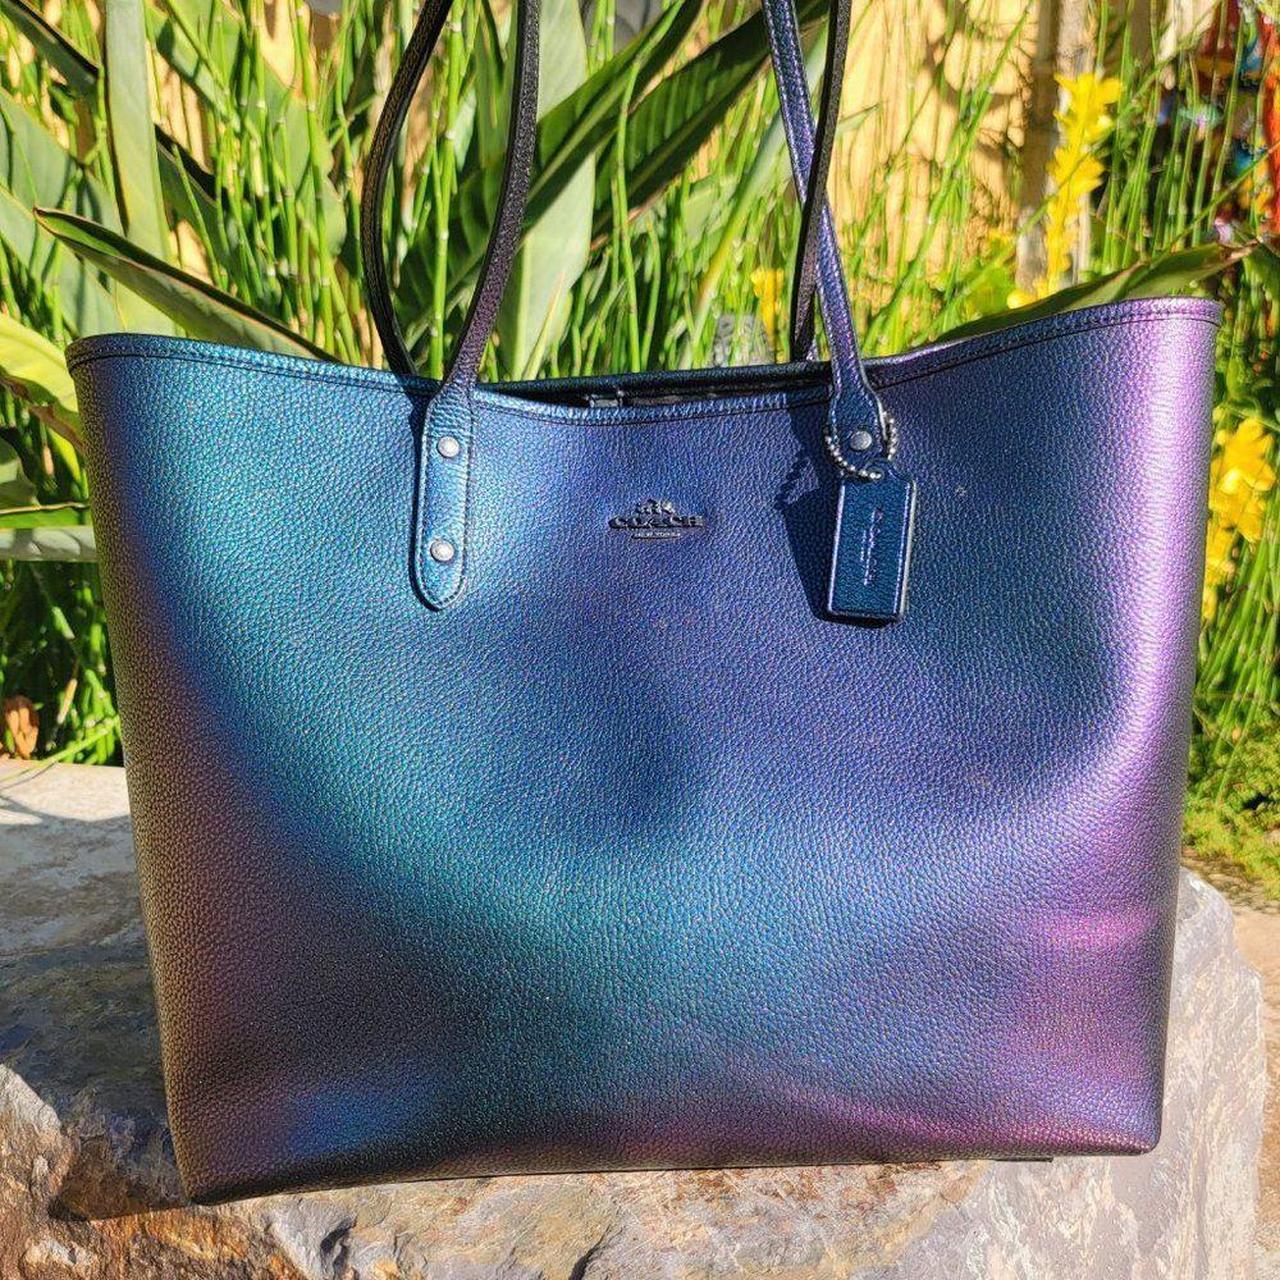 COACH 'SOFT' WALLET Hologram Leather Snap Multi Function Rose purple blue  NEW | eBay